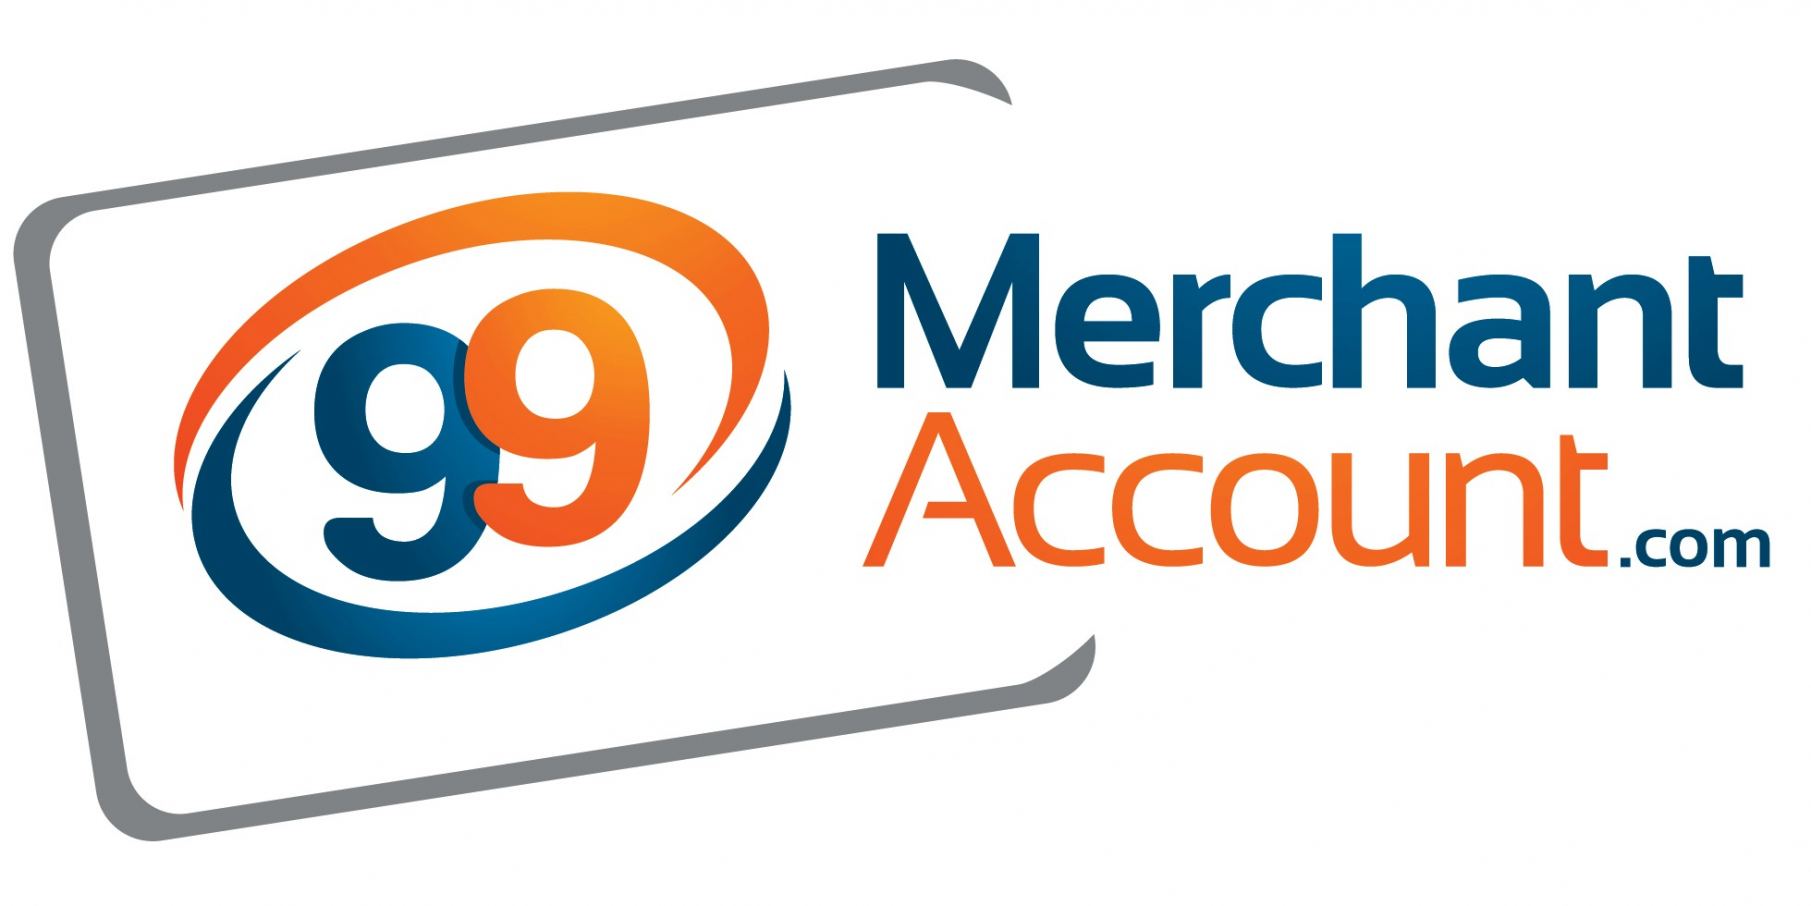 99merchantaccount Logo